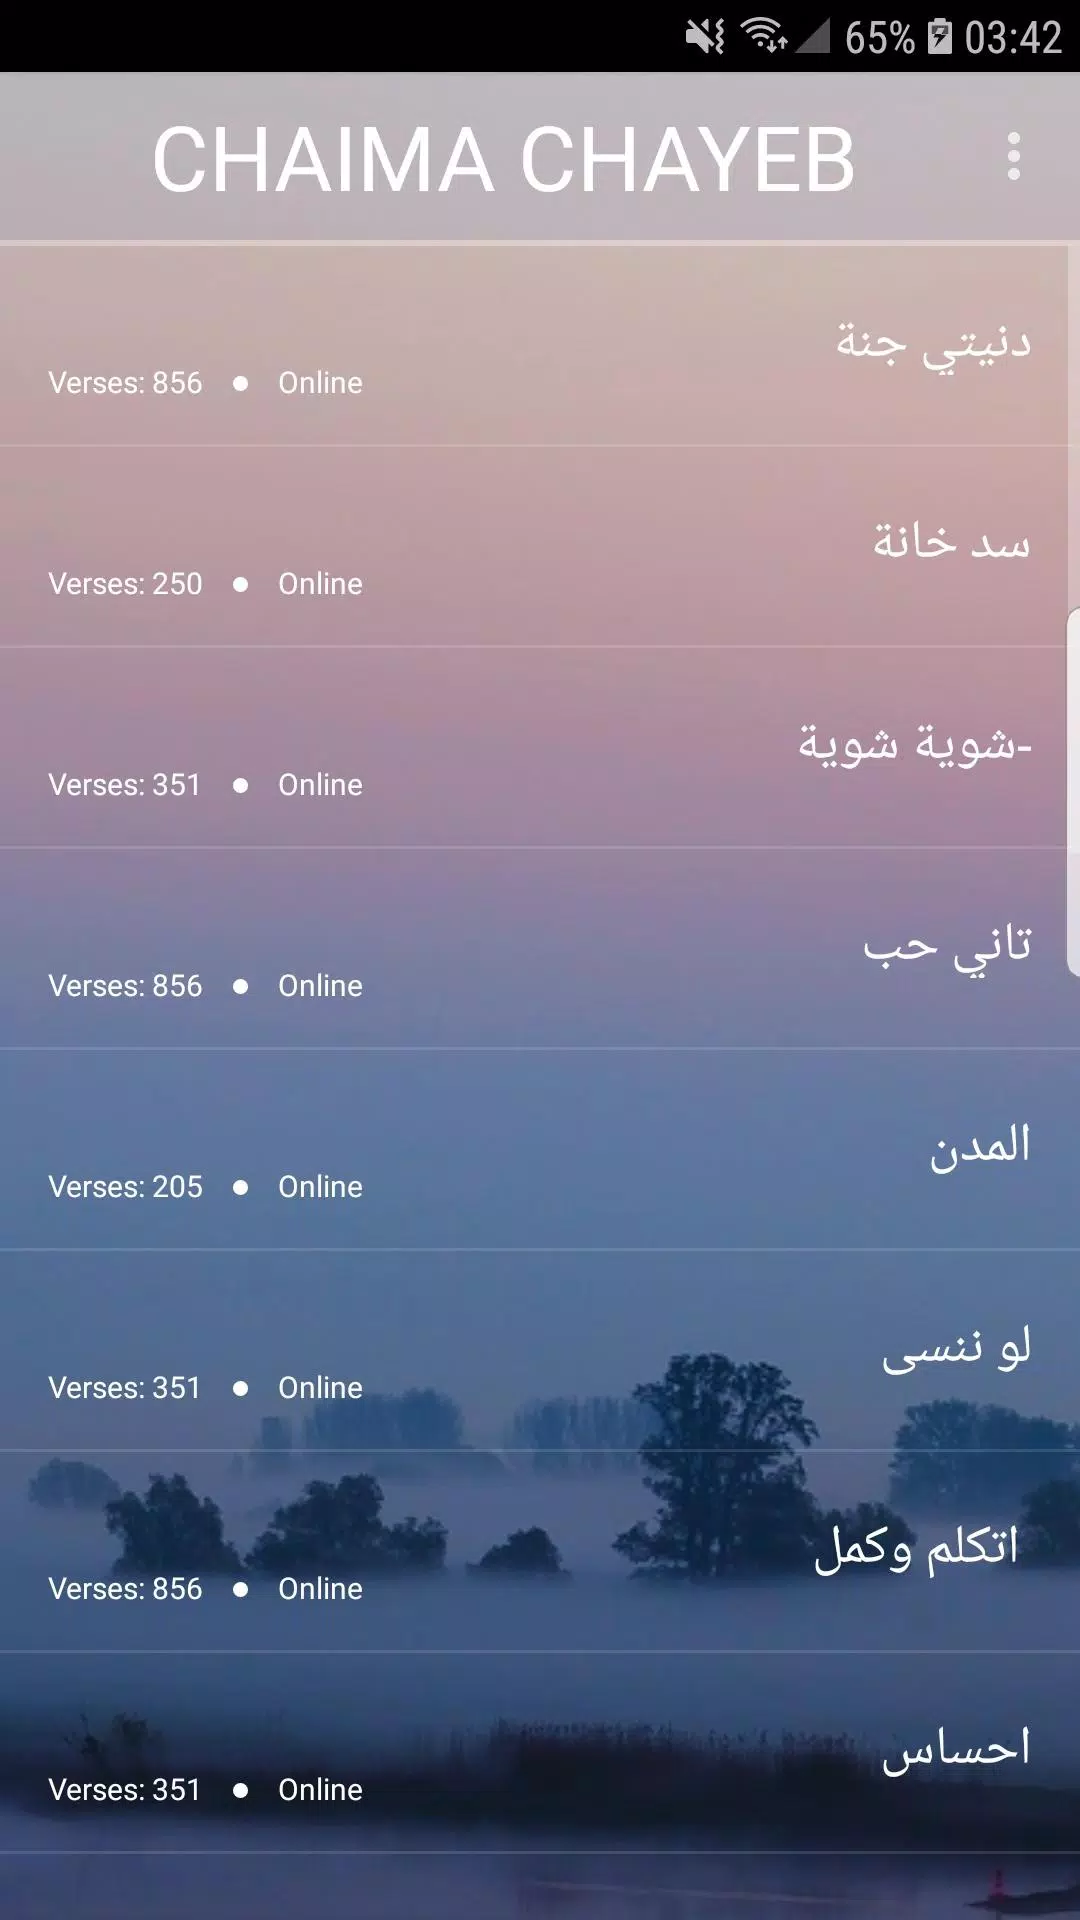 اغاني شيماء الشايب 2019- chaima chayeb‎ MP3 APK pour Android Télécharger